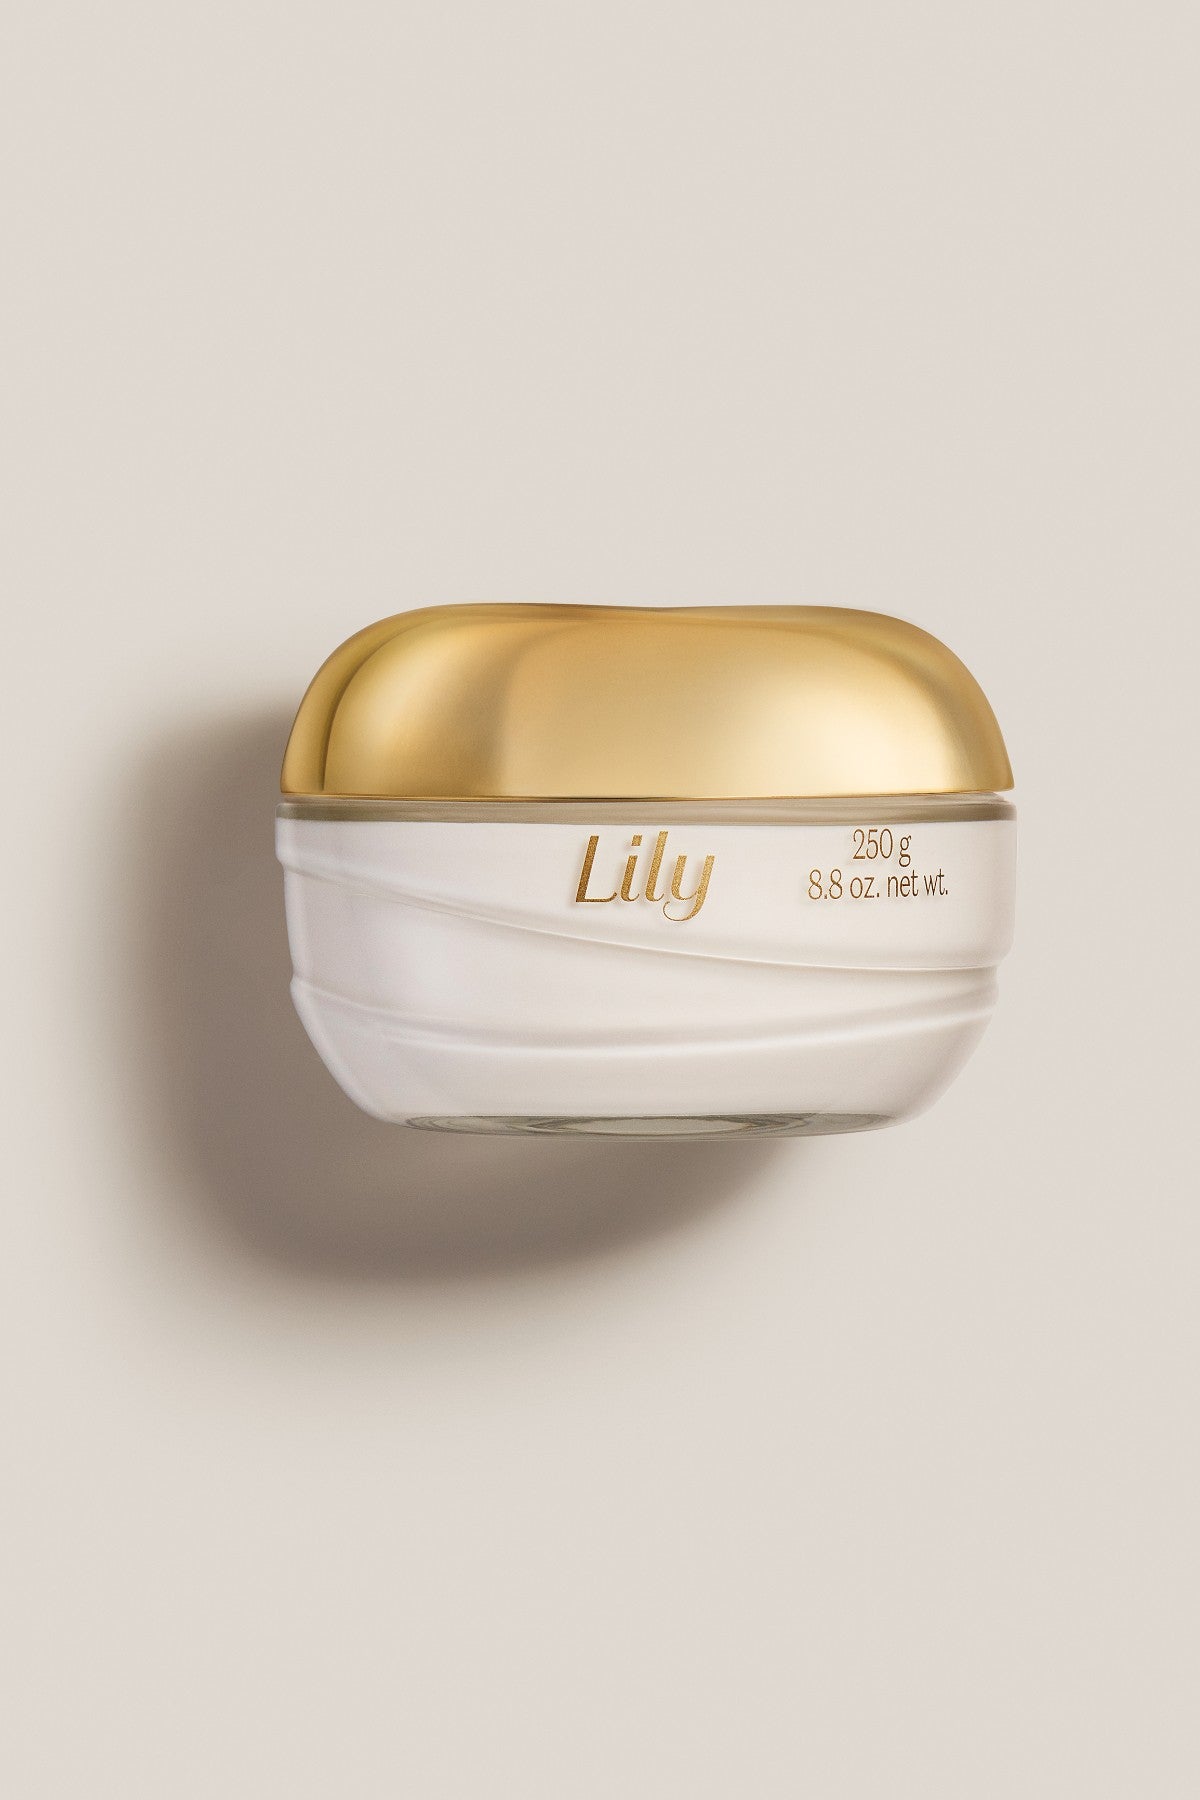 Lily Satin Body Cream